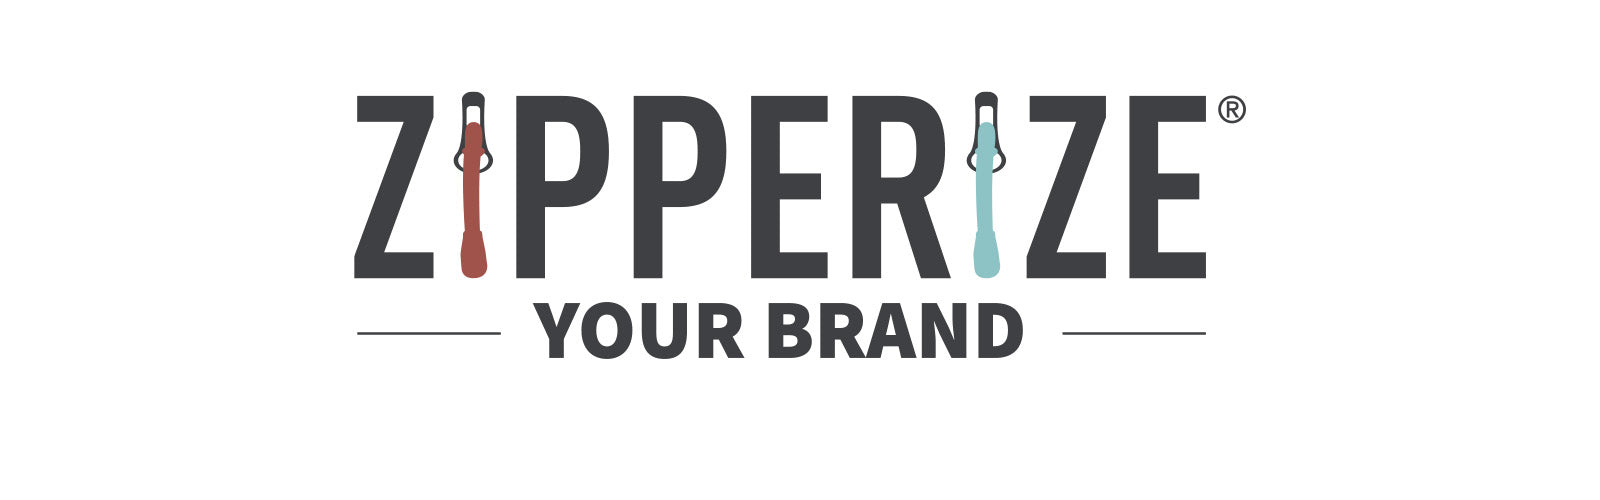 Zipperize Your Brand